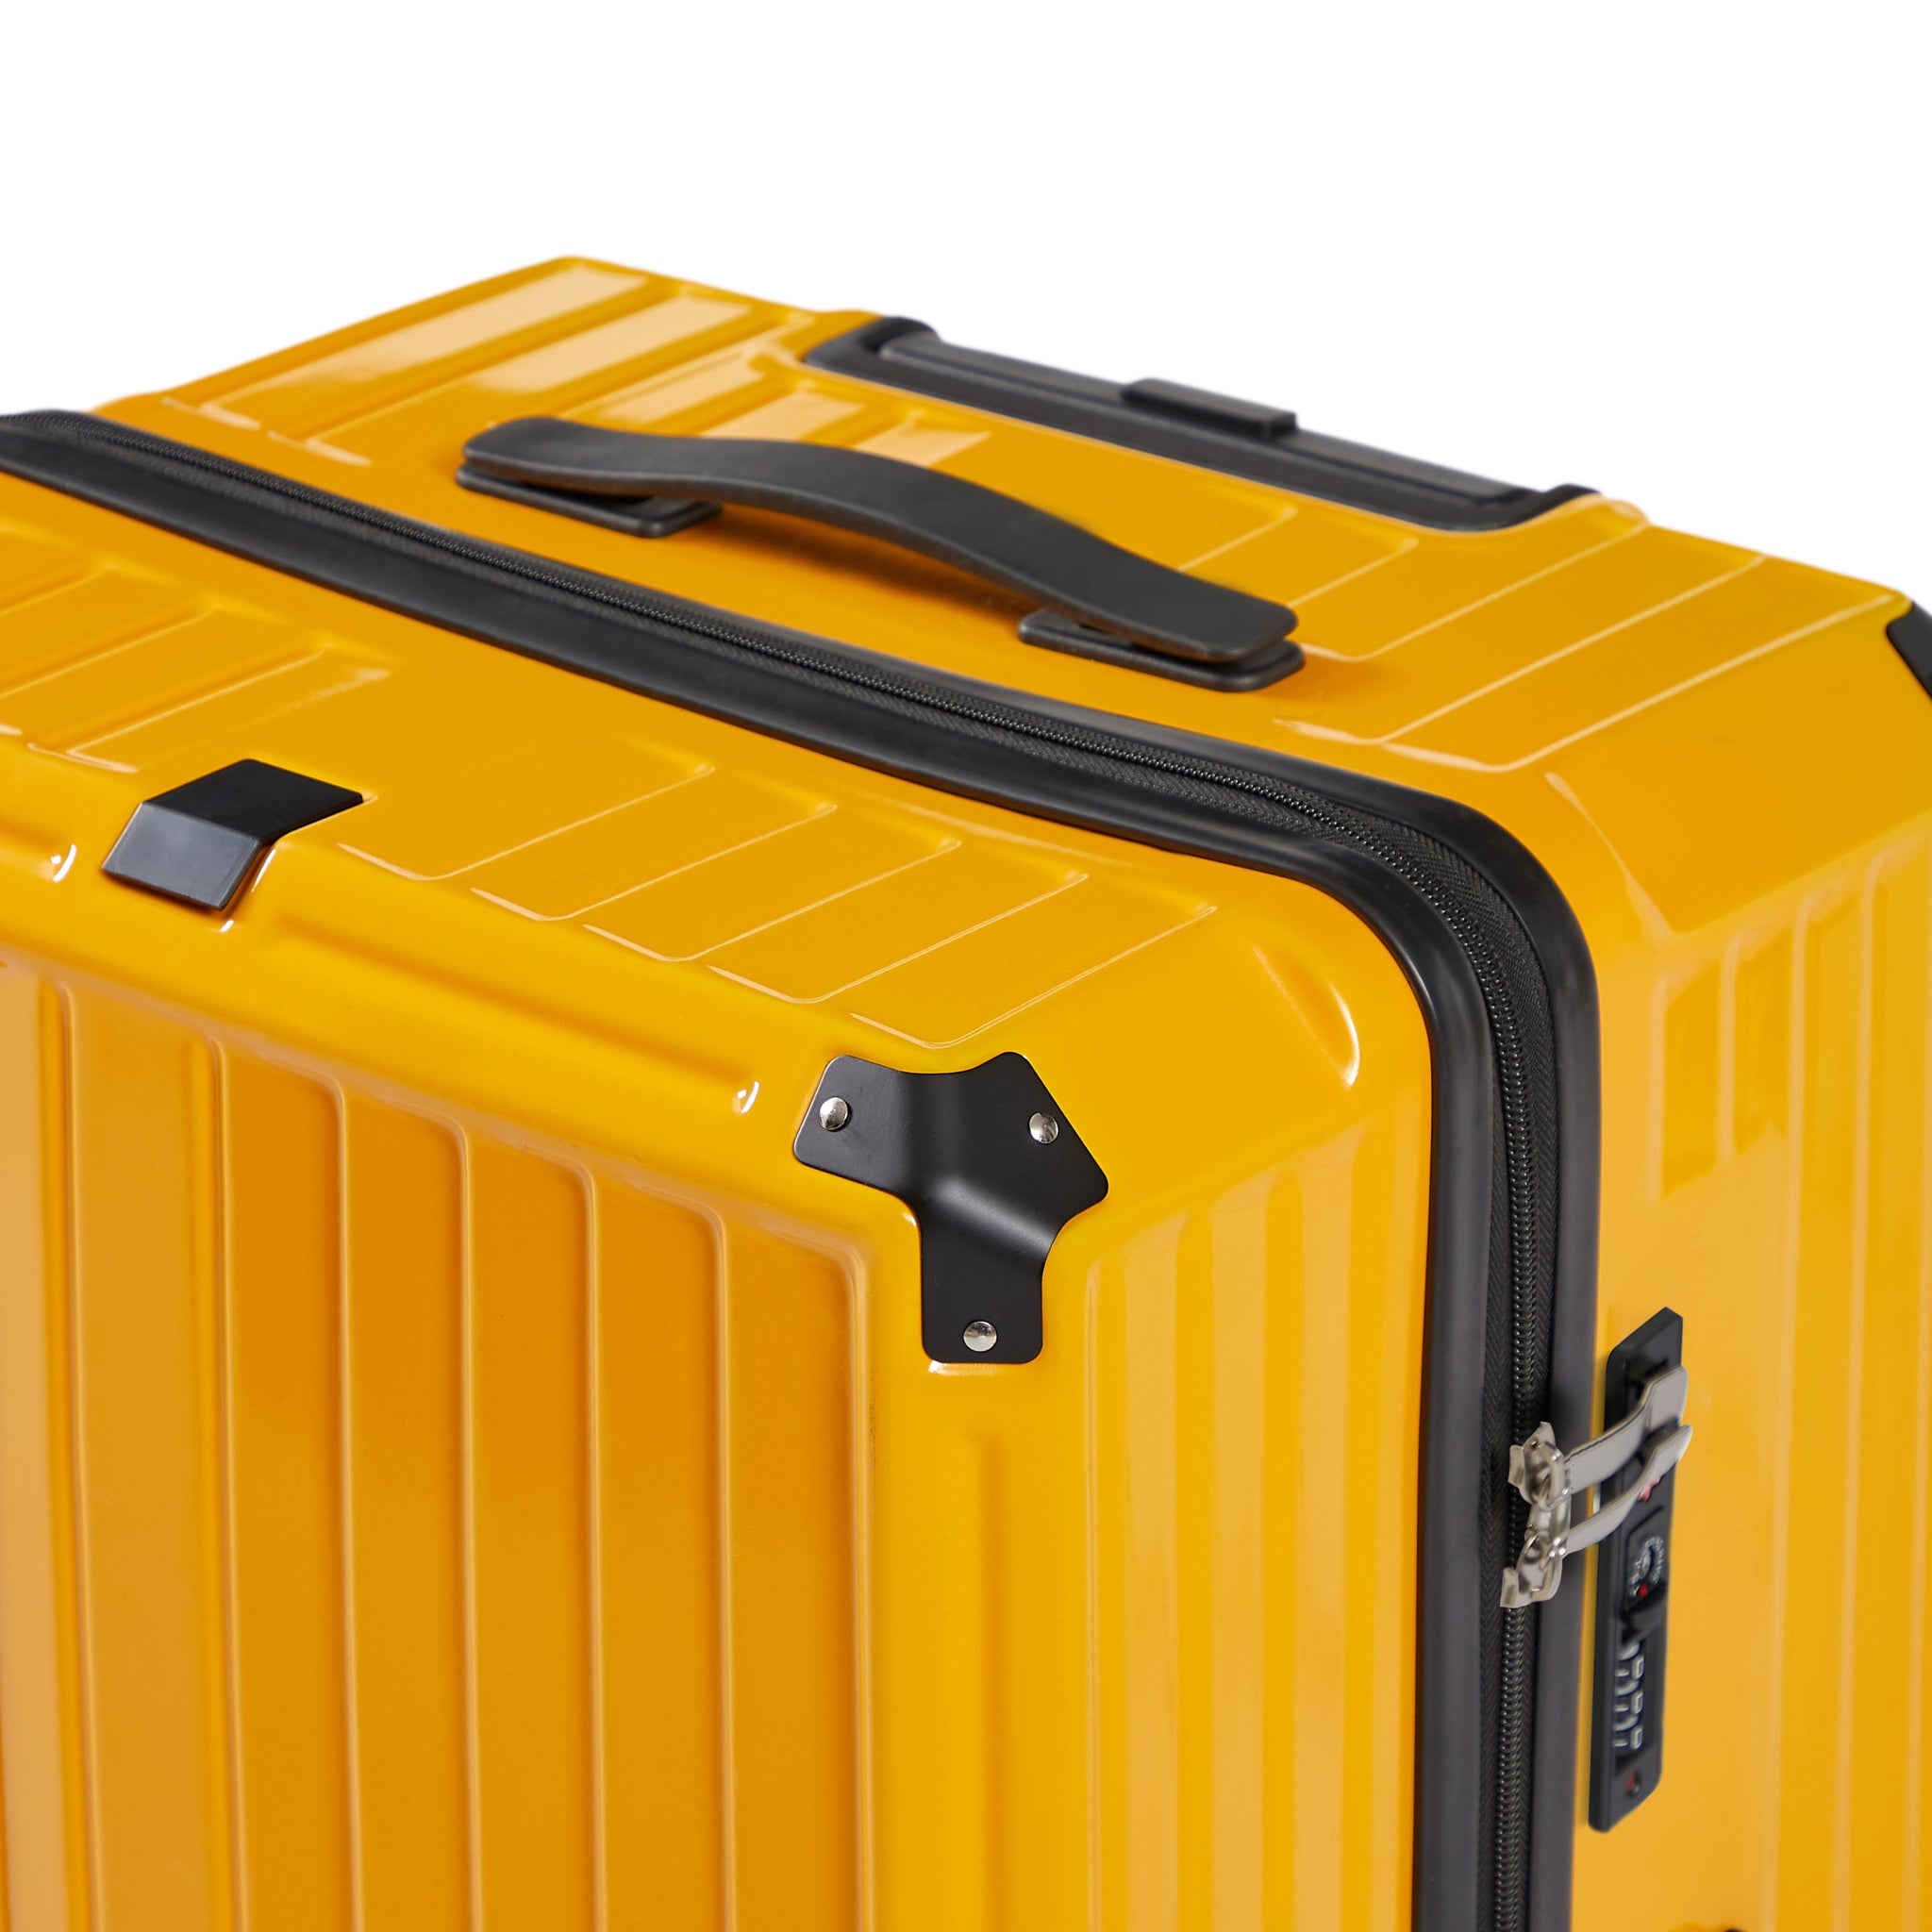 Luggage Set 4 pcs 20" 24" 29" Travel Bag , PC ABS yellow-abs+pc